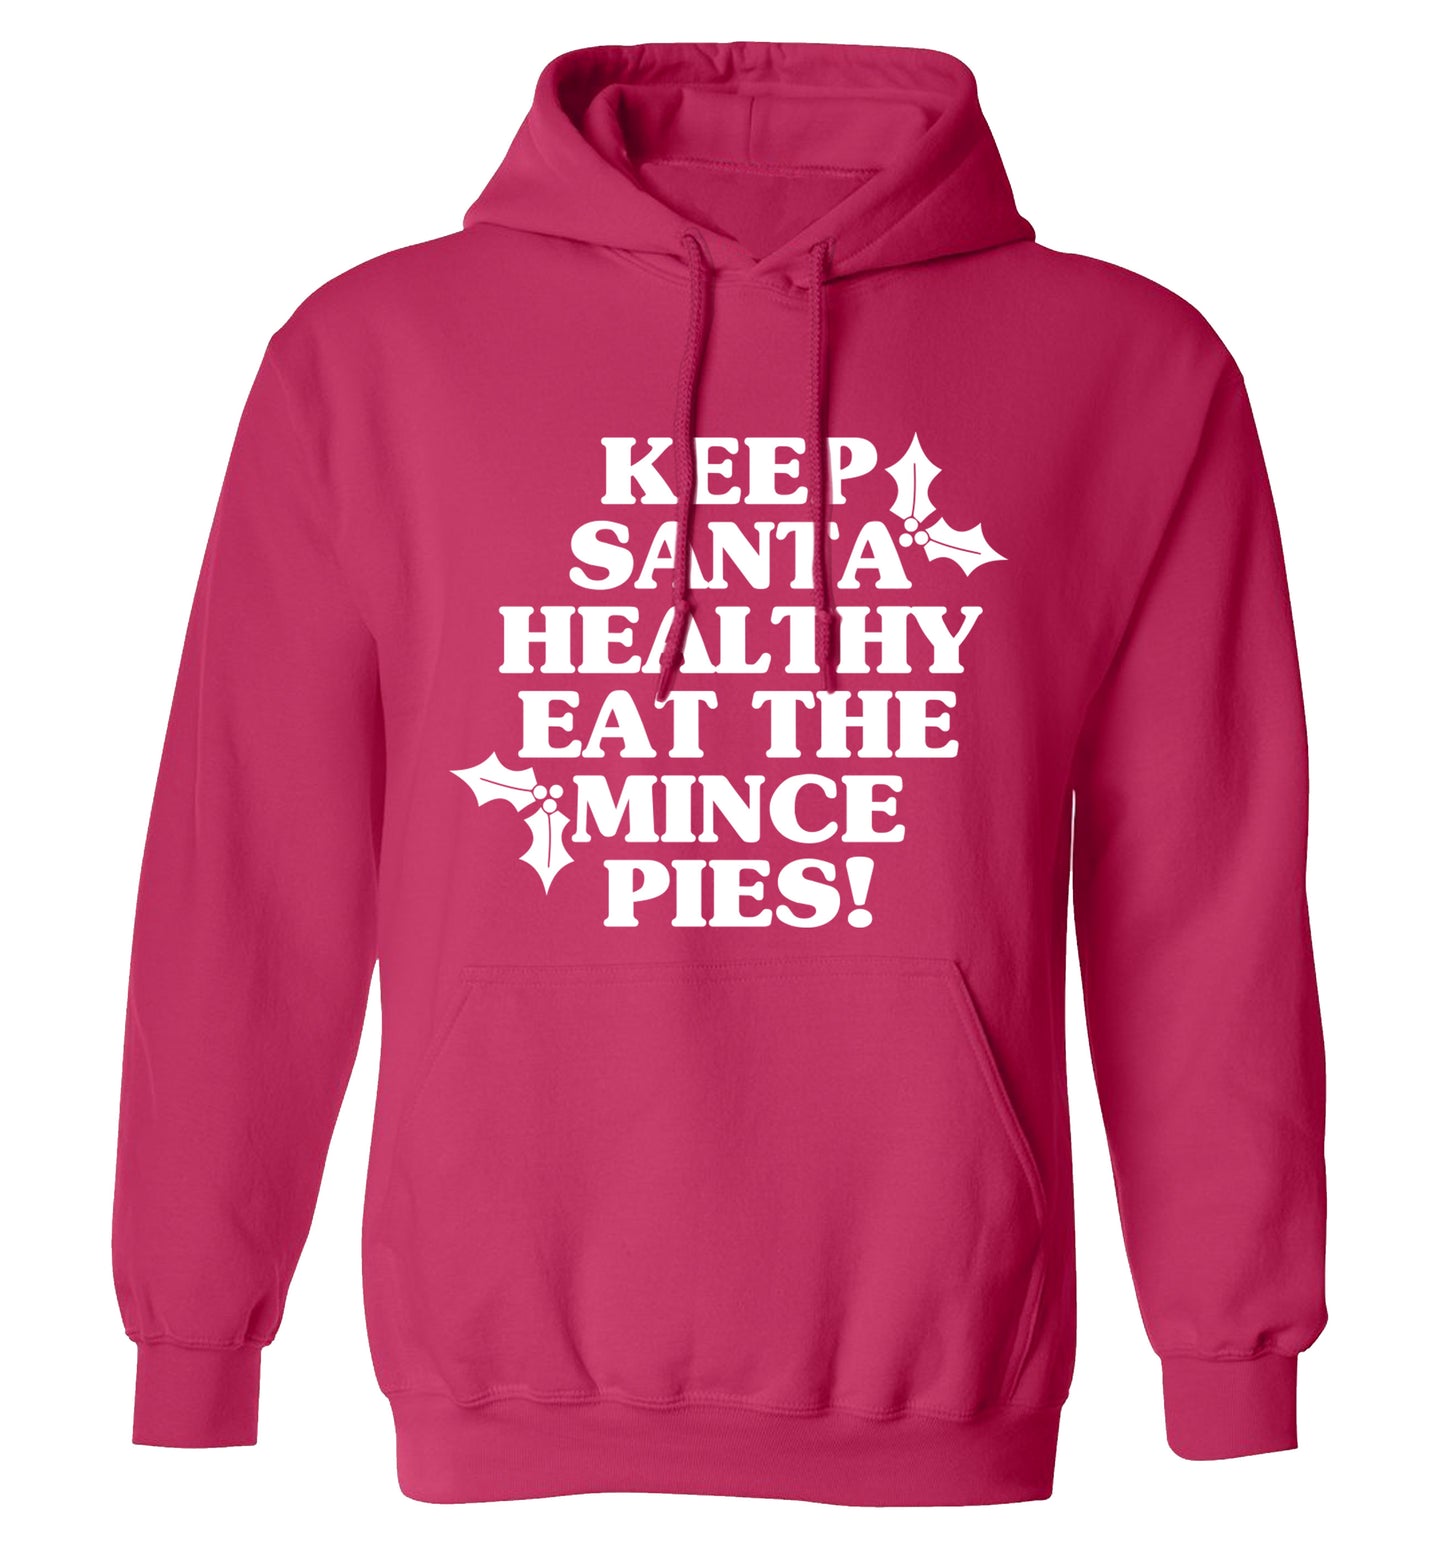 Keep santa healthy eat the mince pies adults unisex pink hoodie 2XL